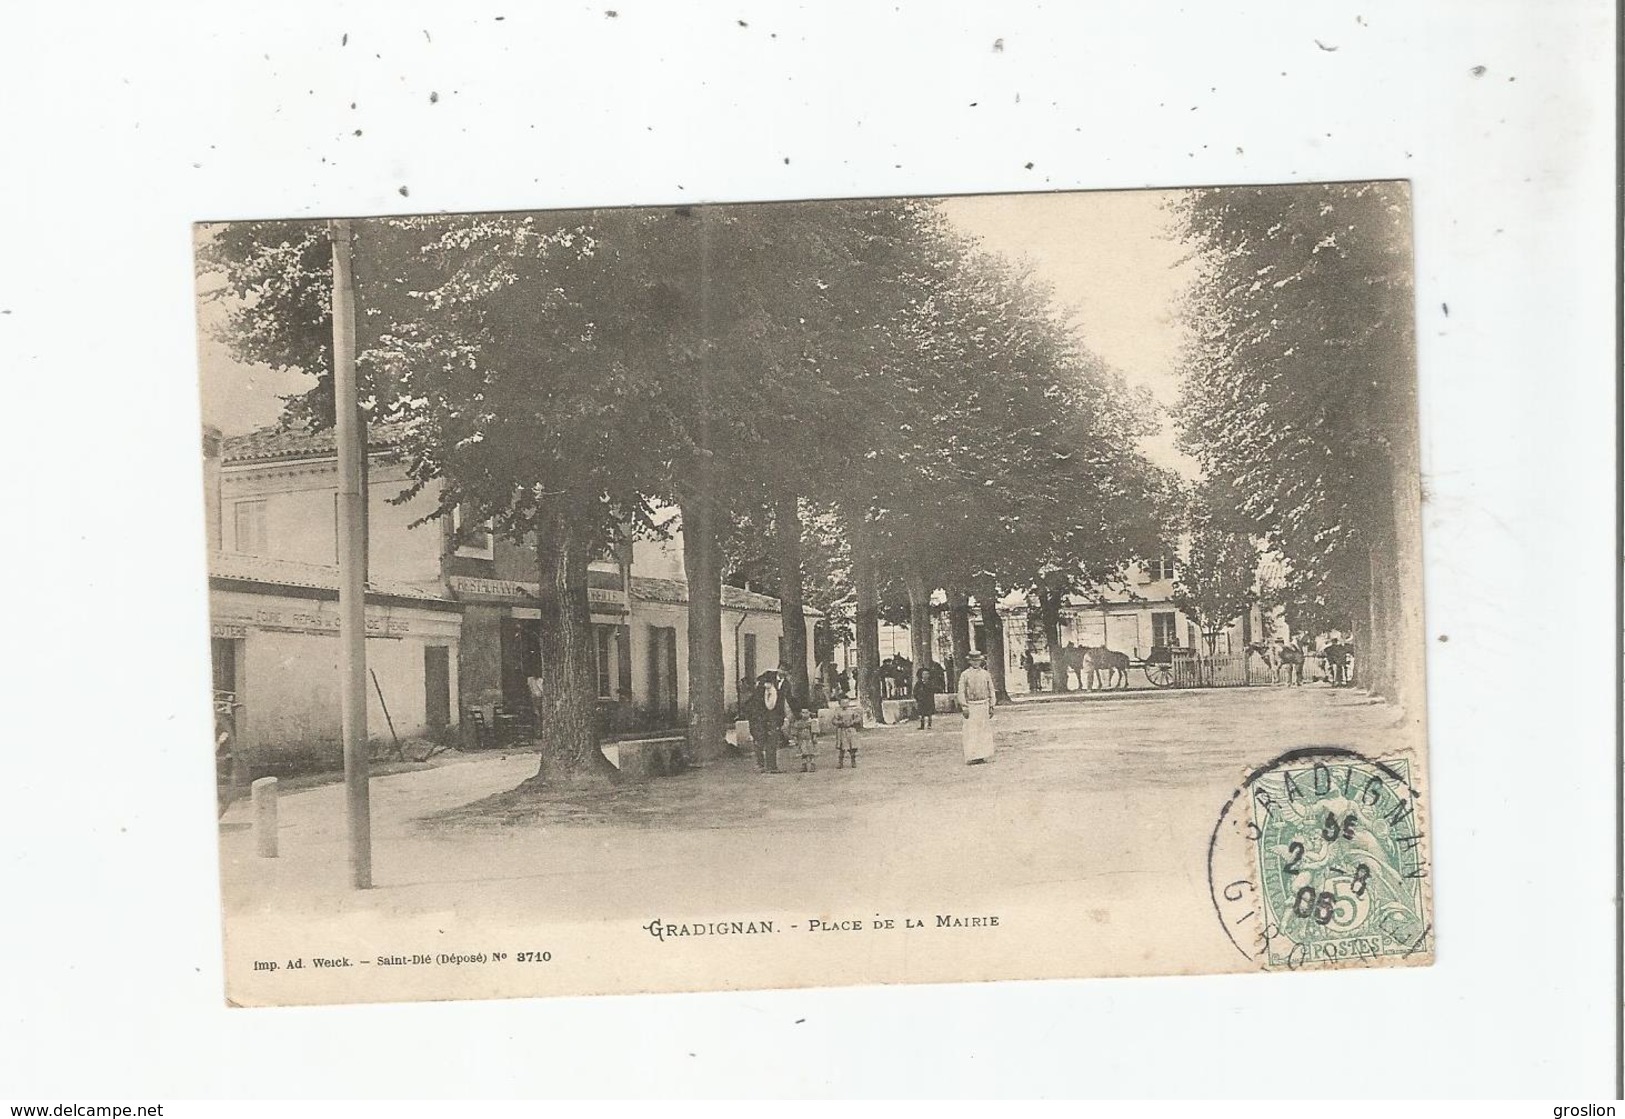 GRADIGNAN (GIRONDE) 3710 PLACE DE LA MAIRIE (CHEVAUX ET ANIMATION) 1905 - Gradignan